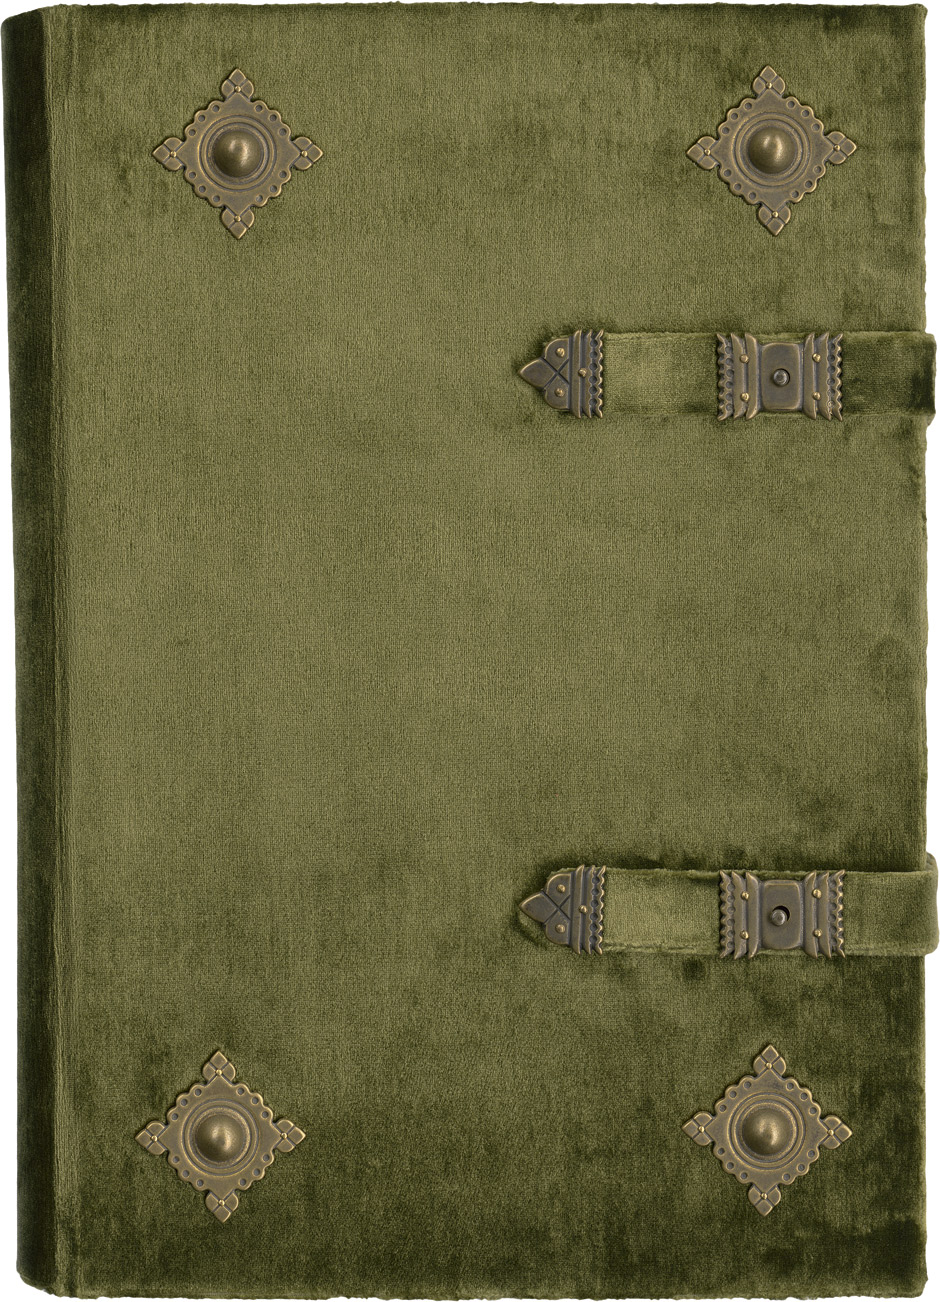 Lot 1417, Auction  115, Historia Plantarum, Codex 459 Biblioteca Casanatense, Rom